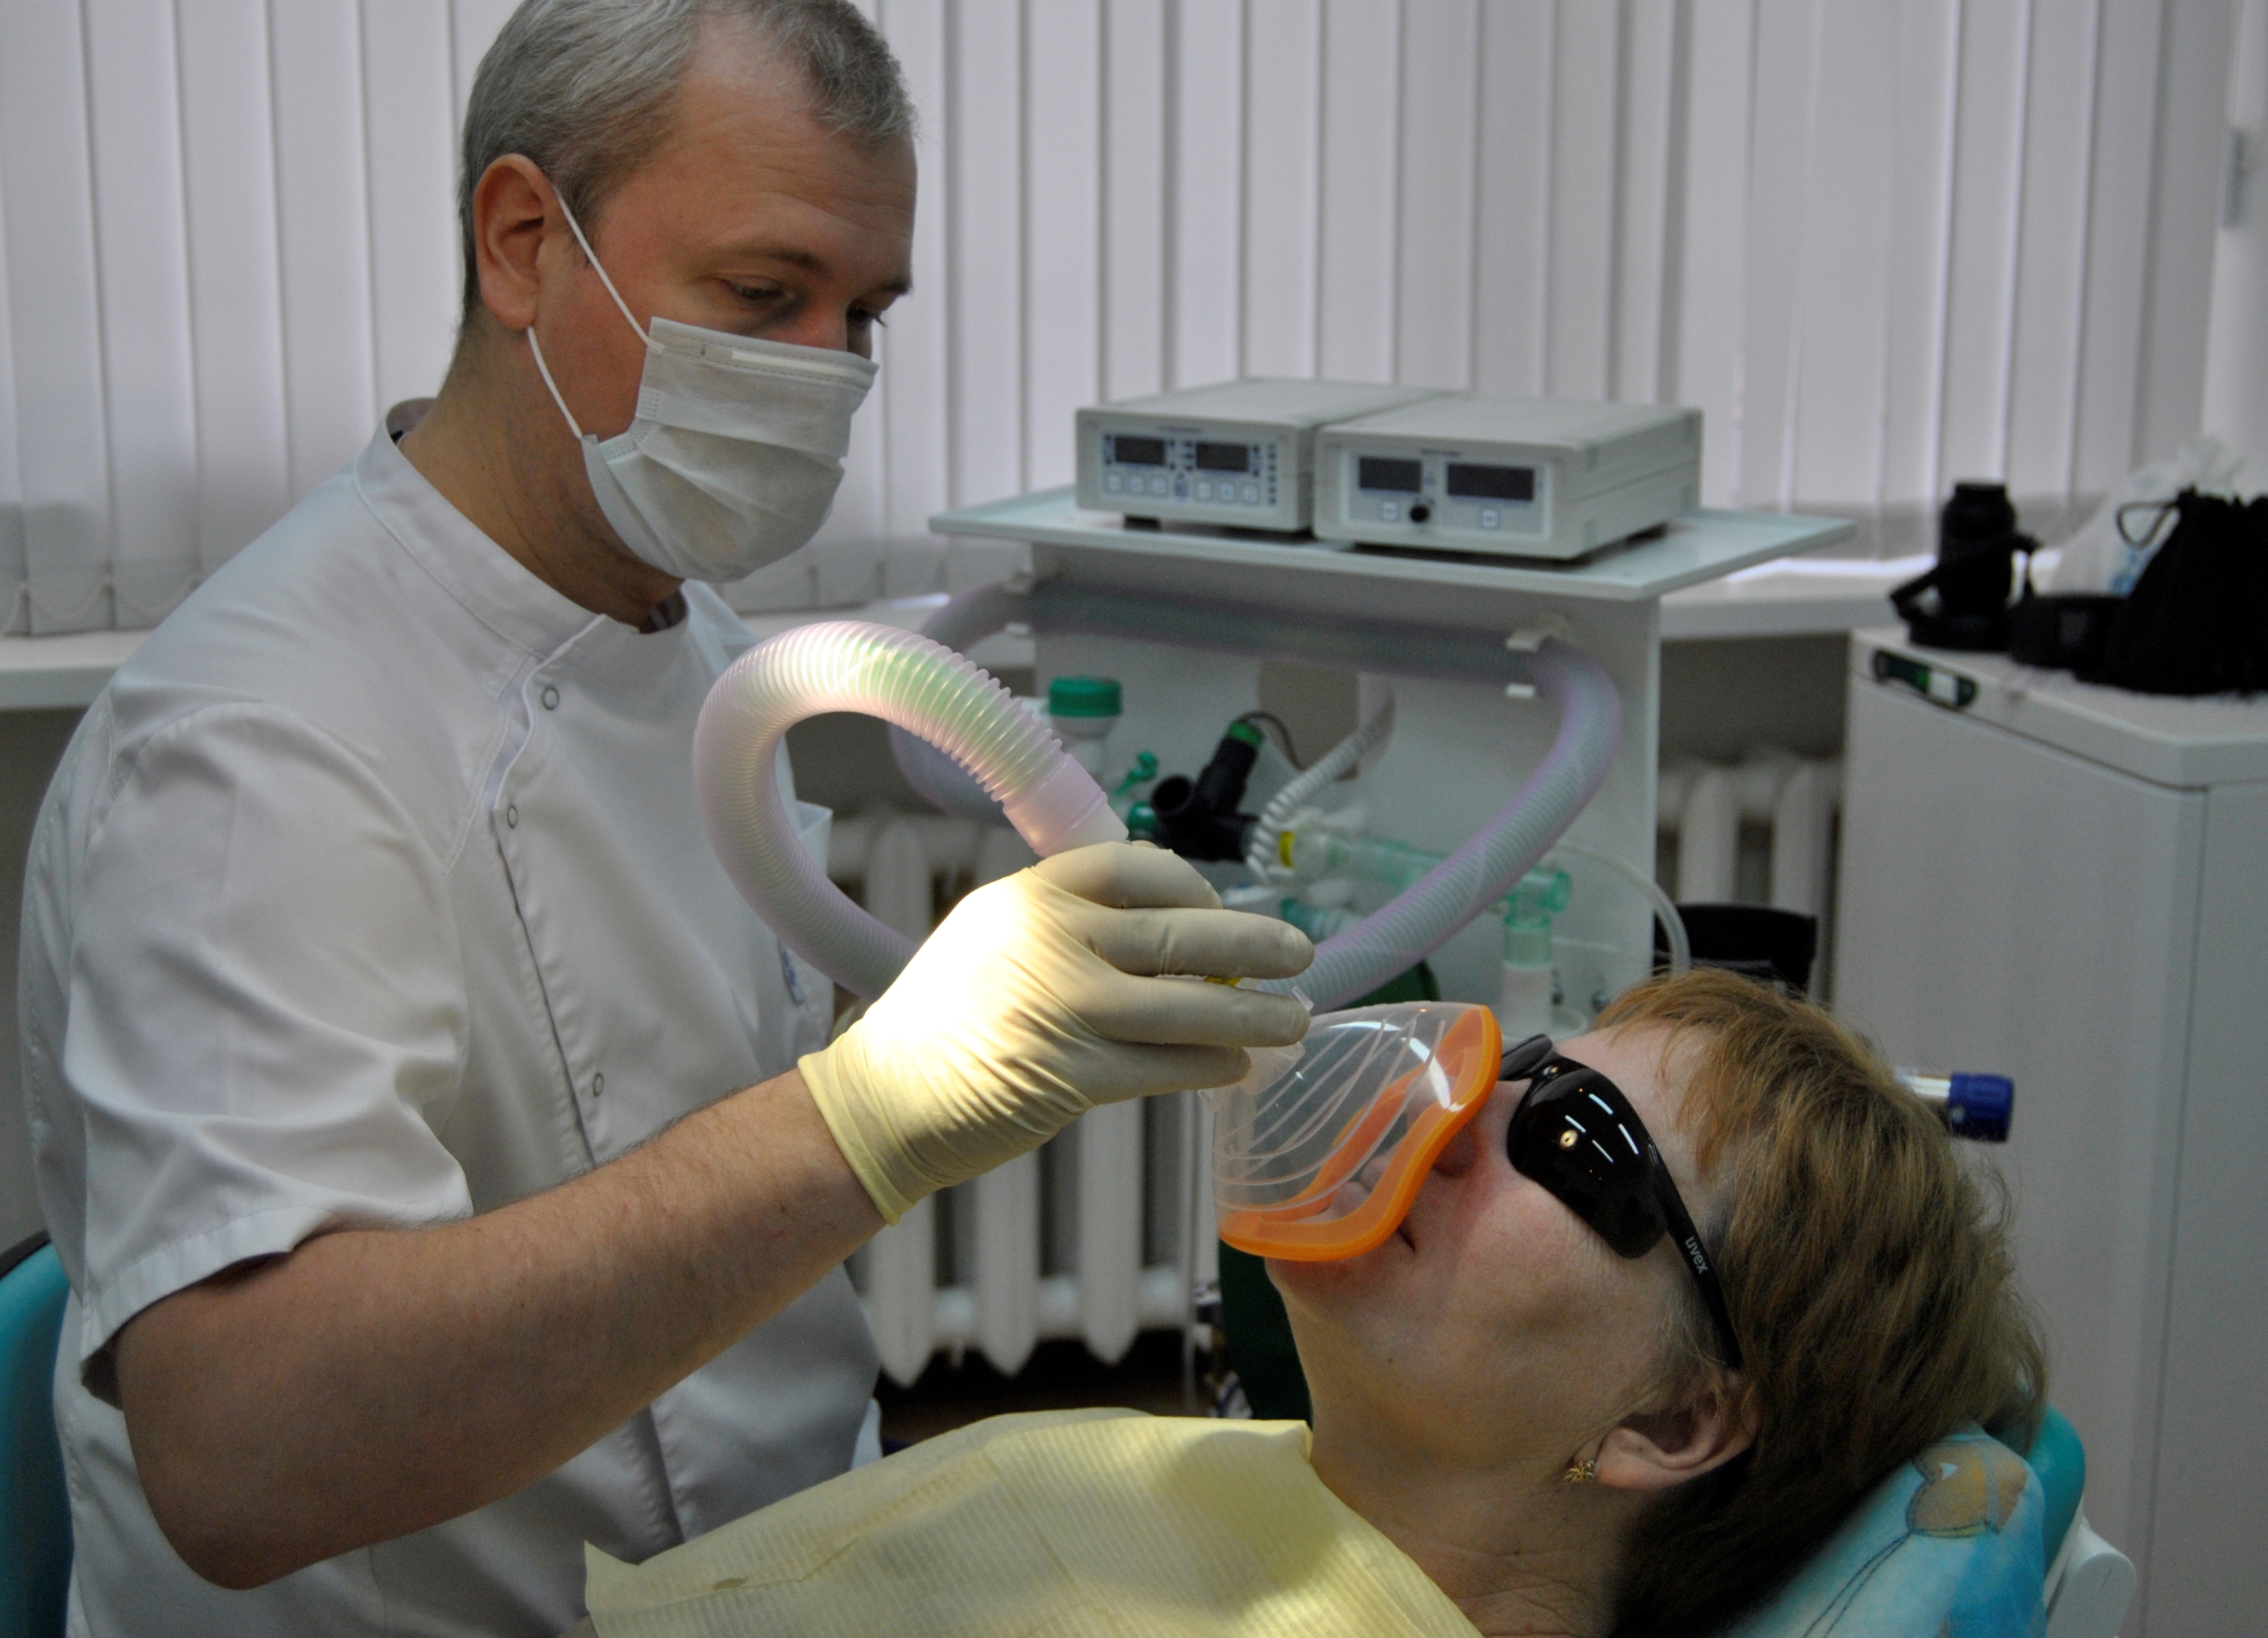 Стоматологический наркоз. Аппарат Matrix седация с севораном. Общая анестезия в стоматологии. Общий наркоз в стоматологии. Зуб под общим наркозом.